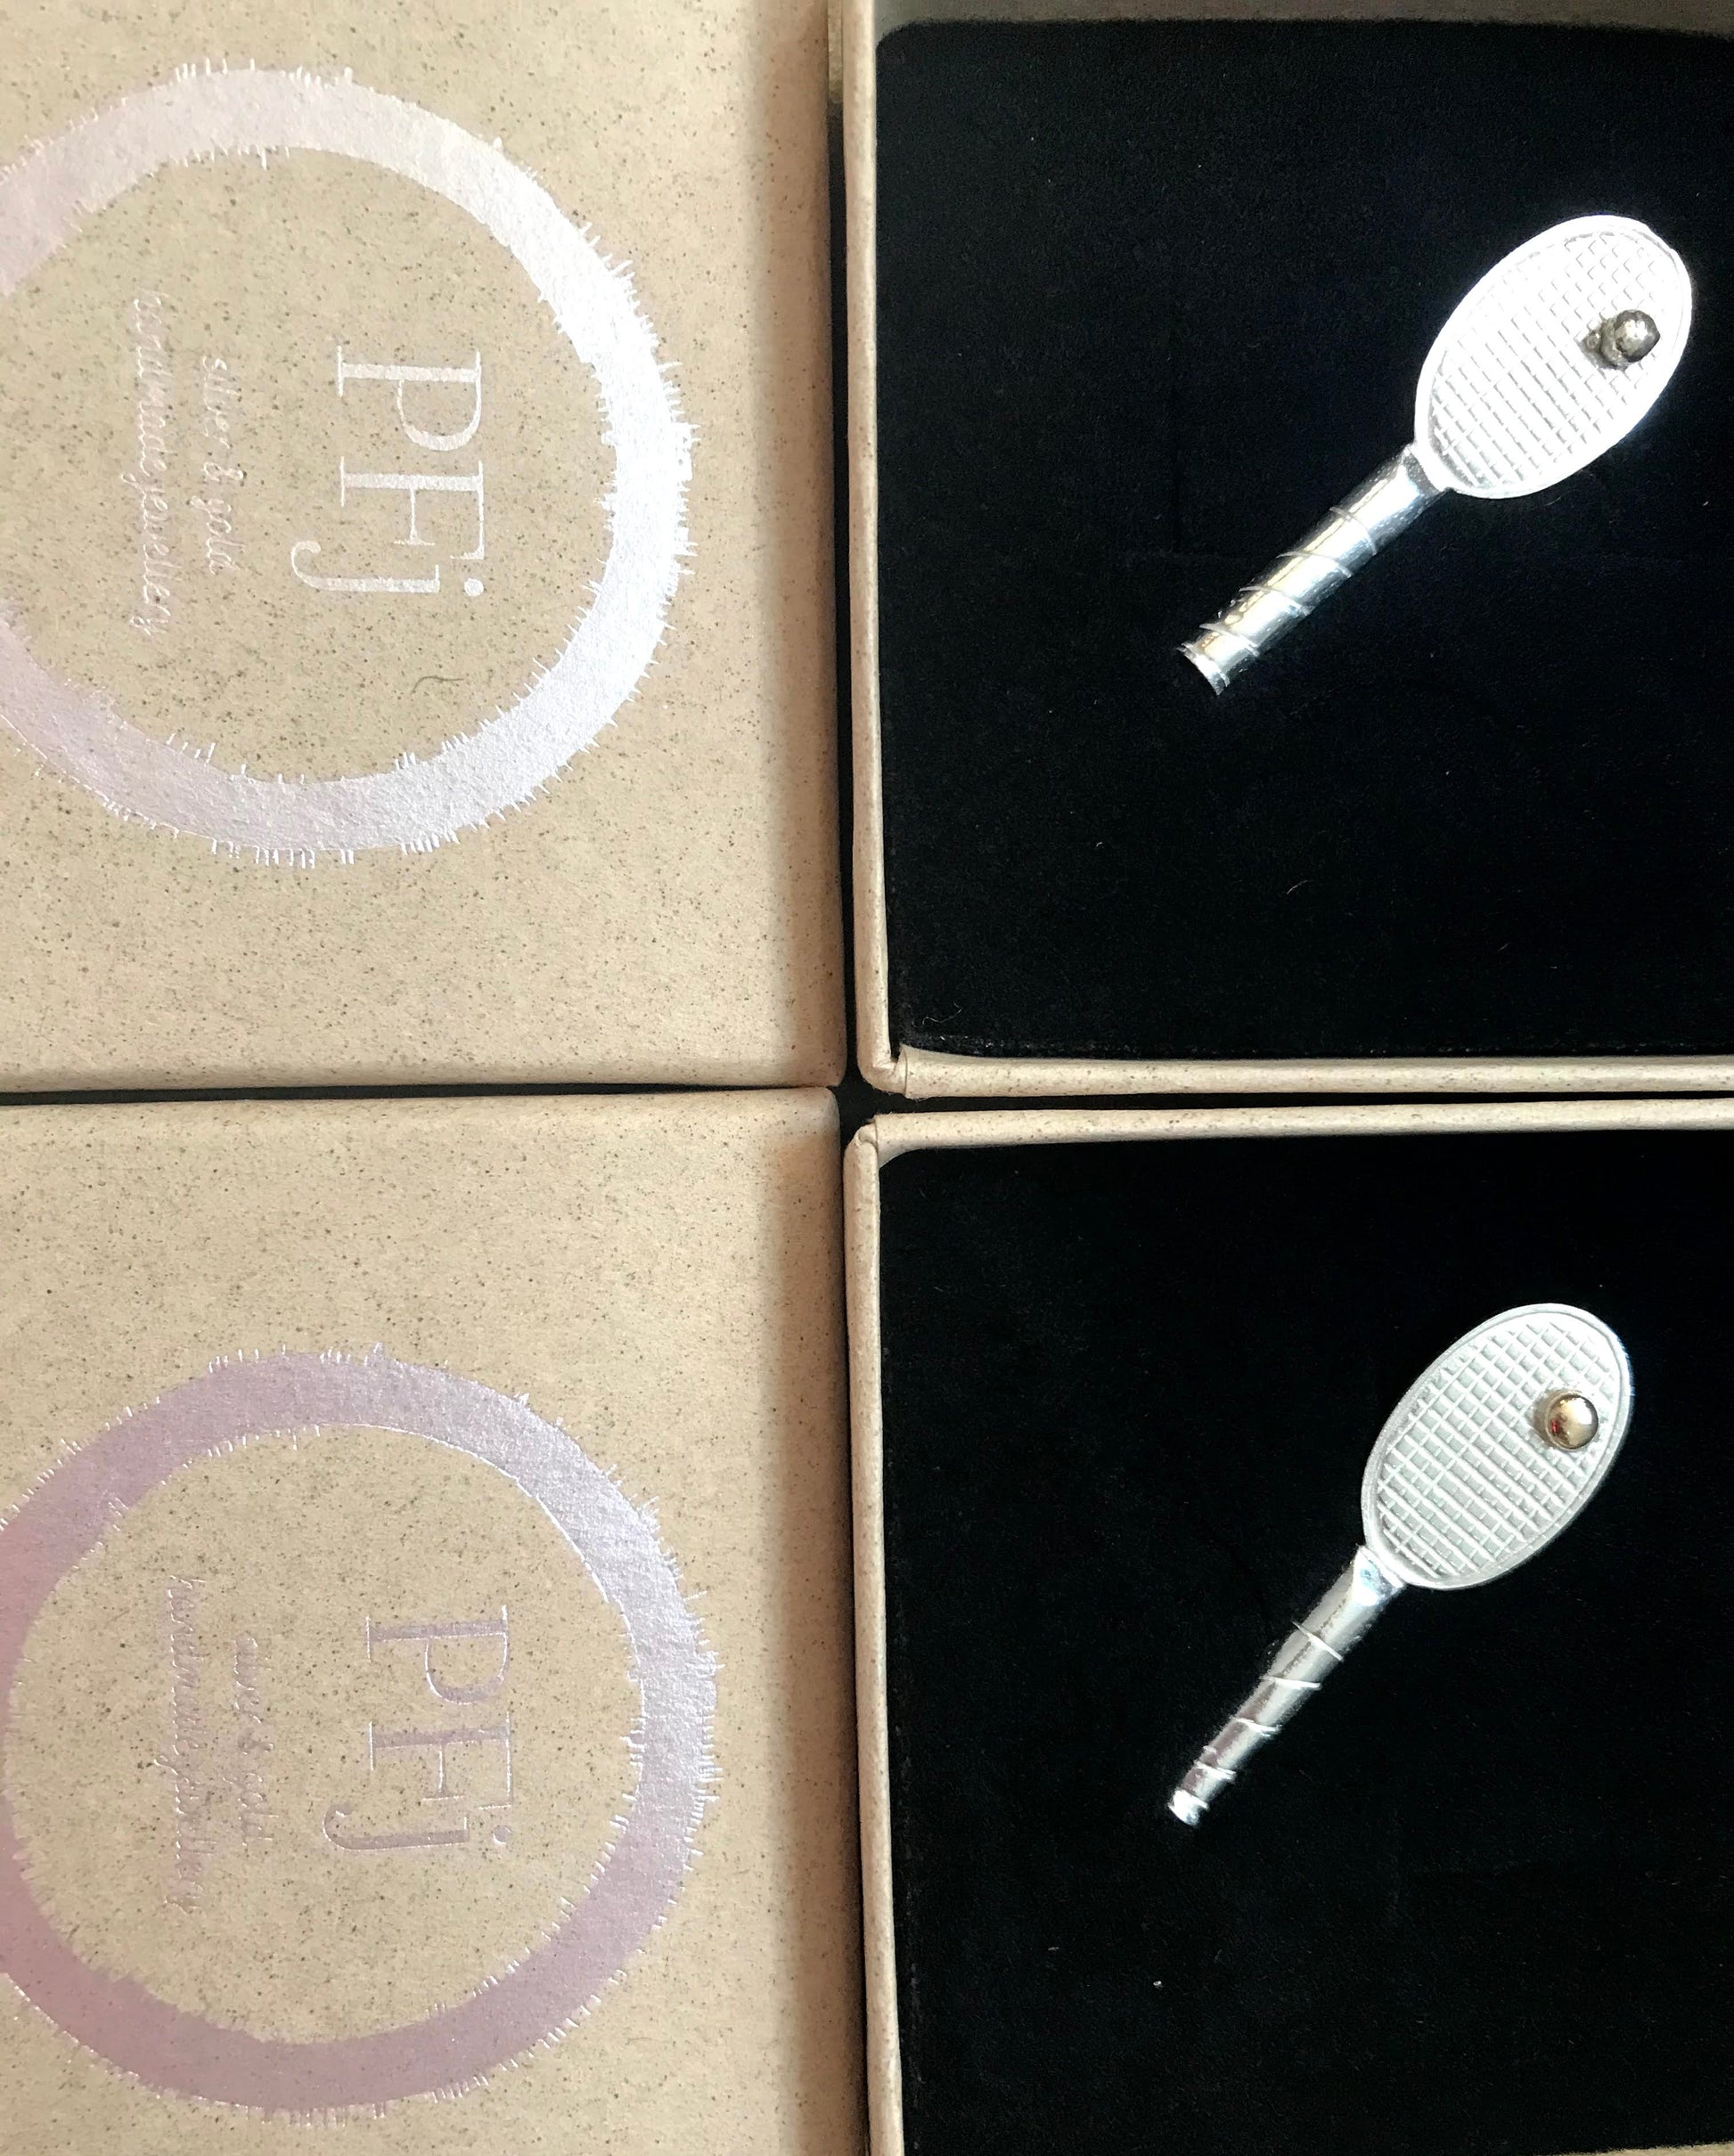 Sterling silver handmade tennis racket stick pin with packaging - PFj box logo with black velvet insert